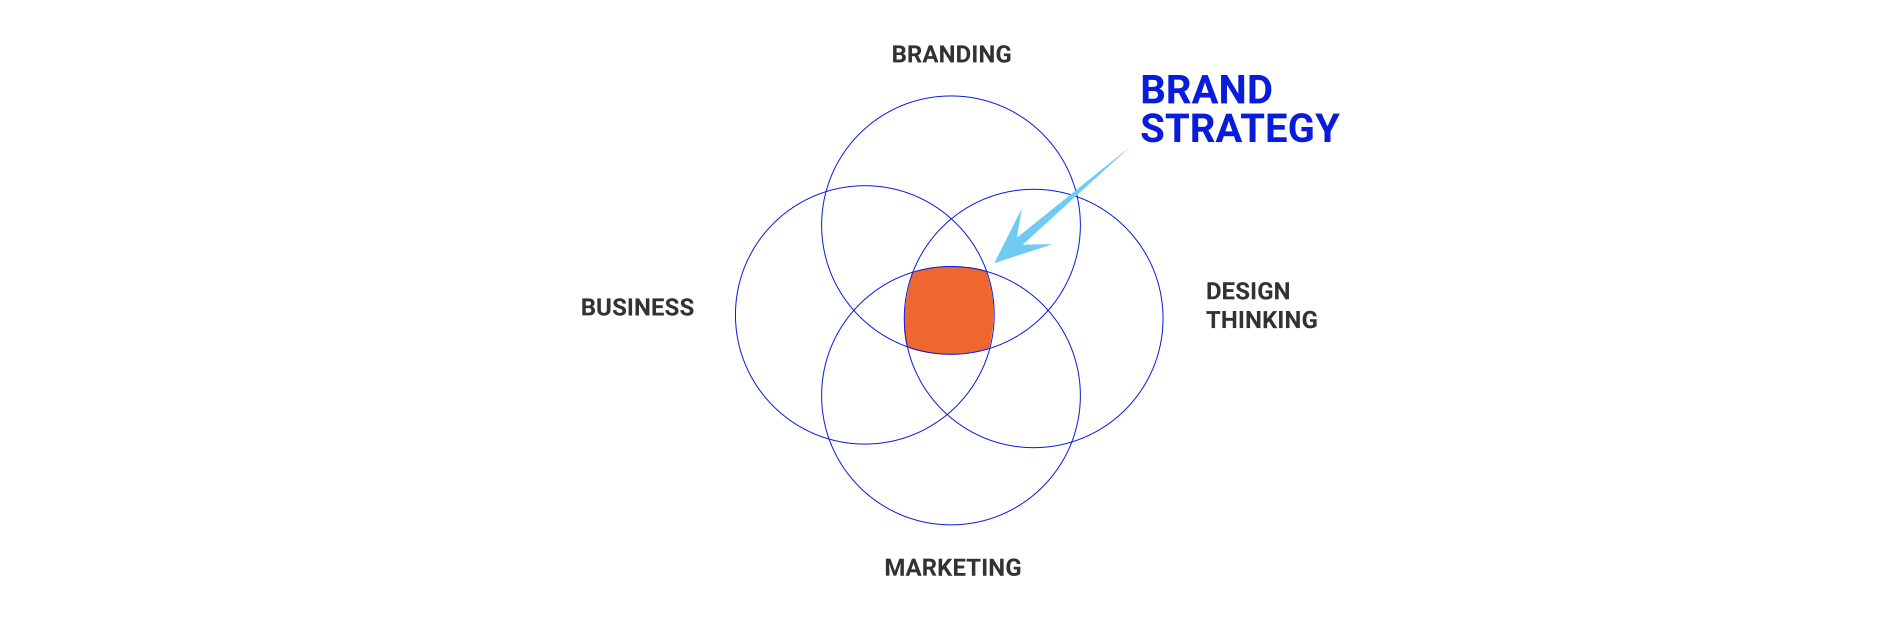 brand_strategy_core